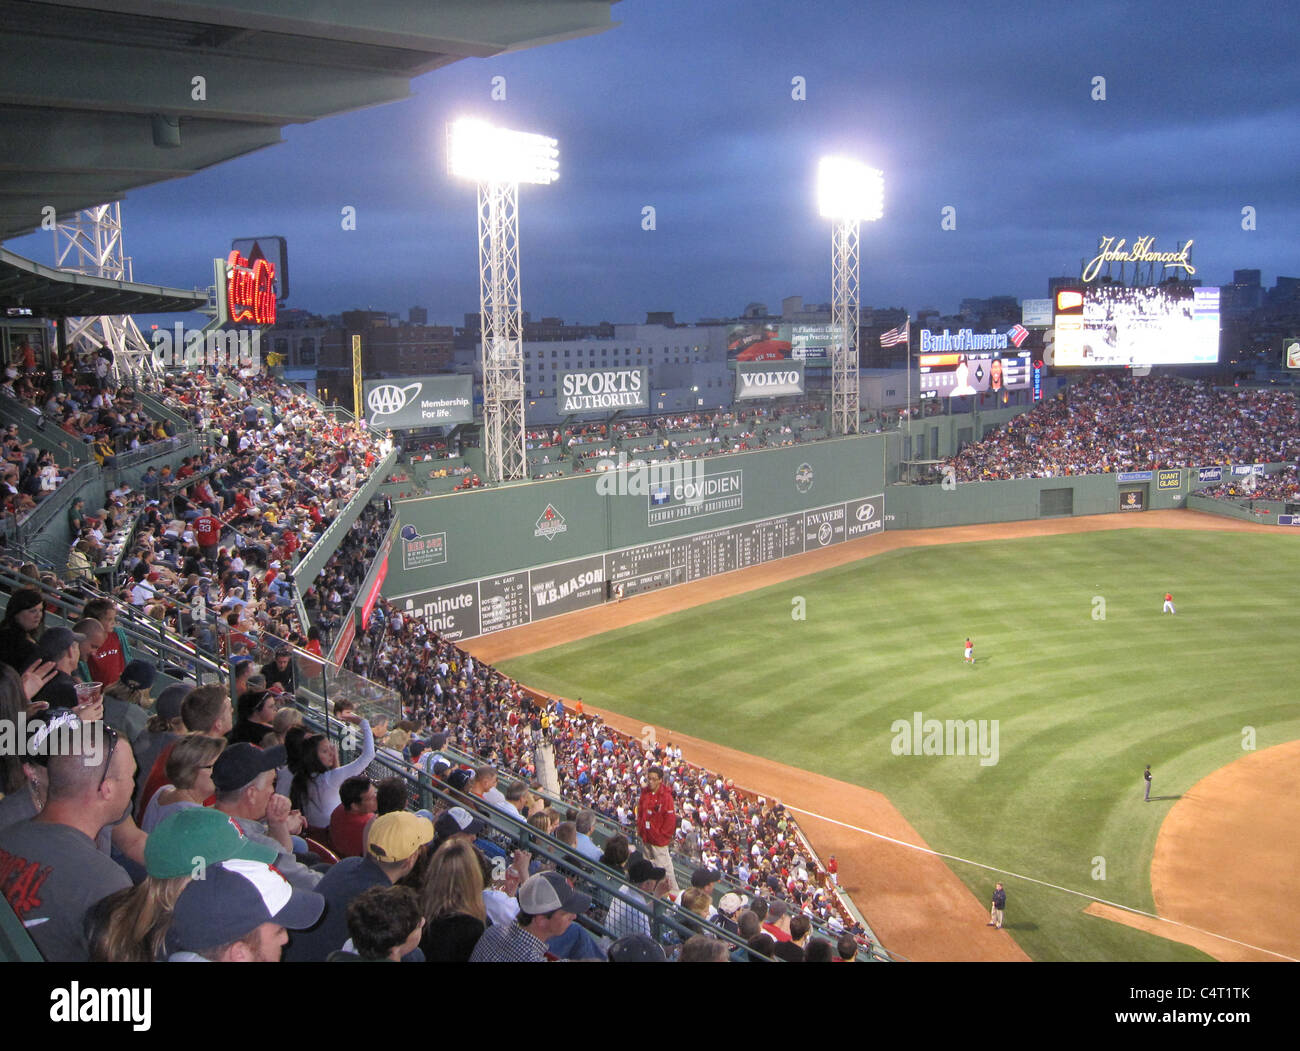 A Major League Baseball game at Fenway Park in Boston, Massachusetts. Stock Photo